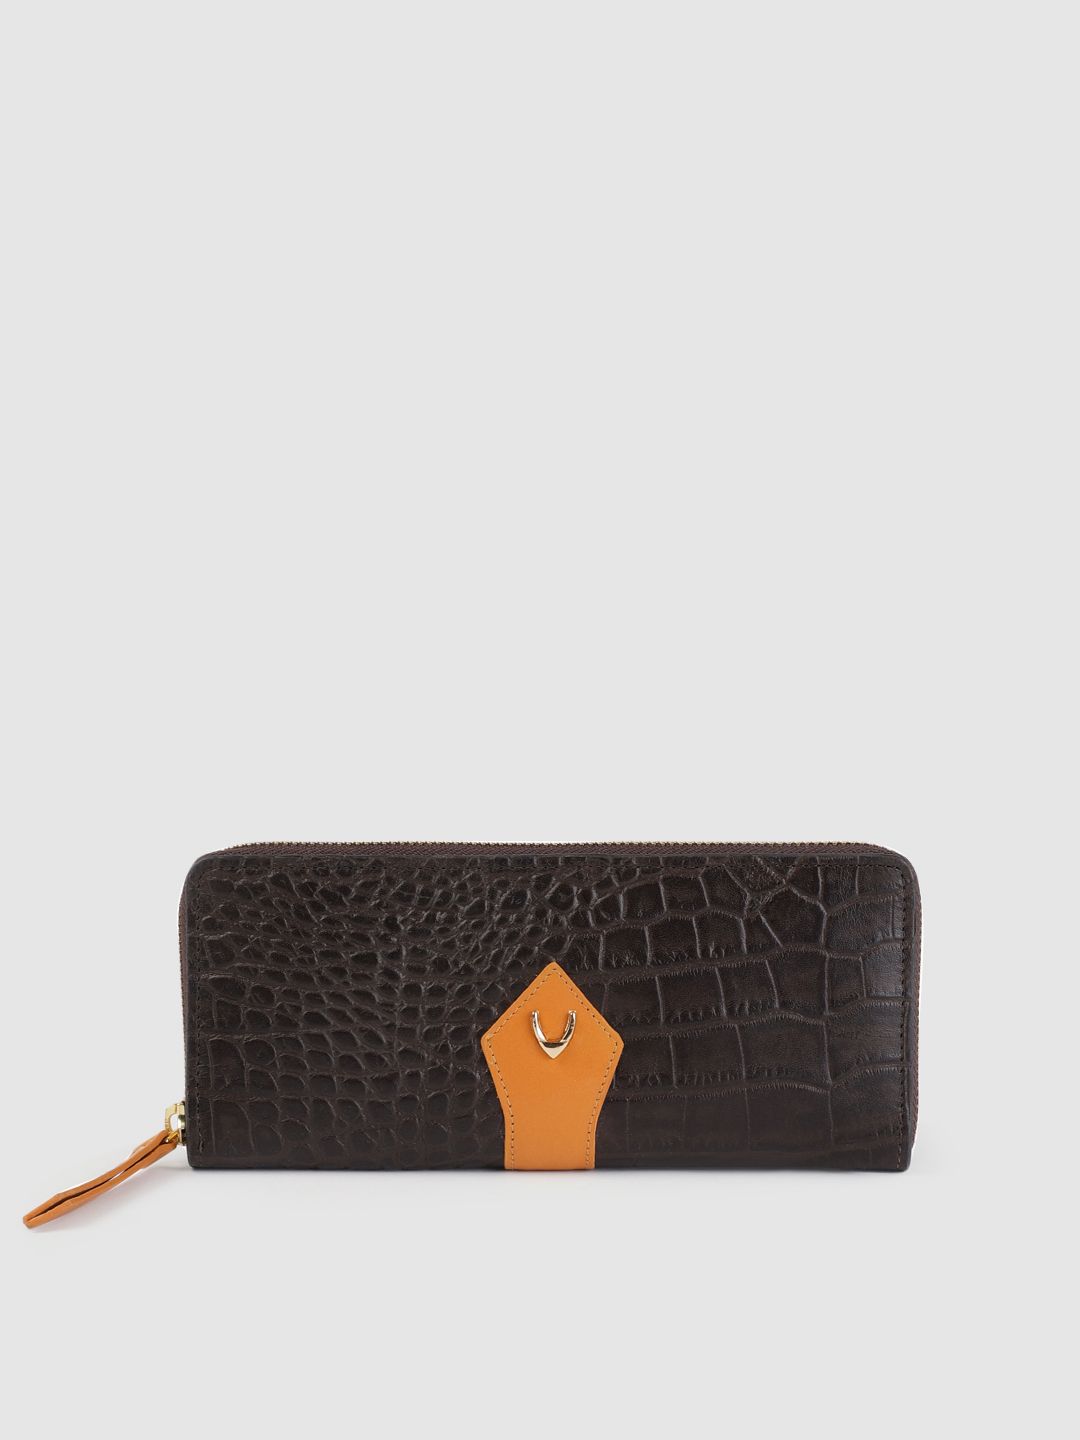 Hidesign Women Brown Textured Leather Zip Around Wallet Price in India